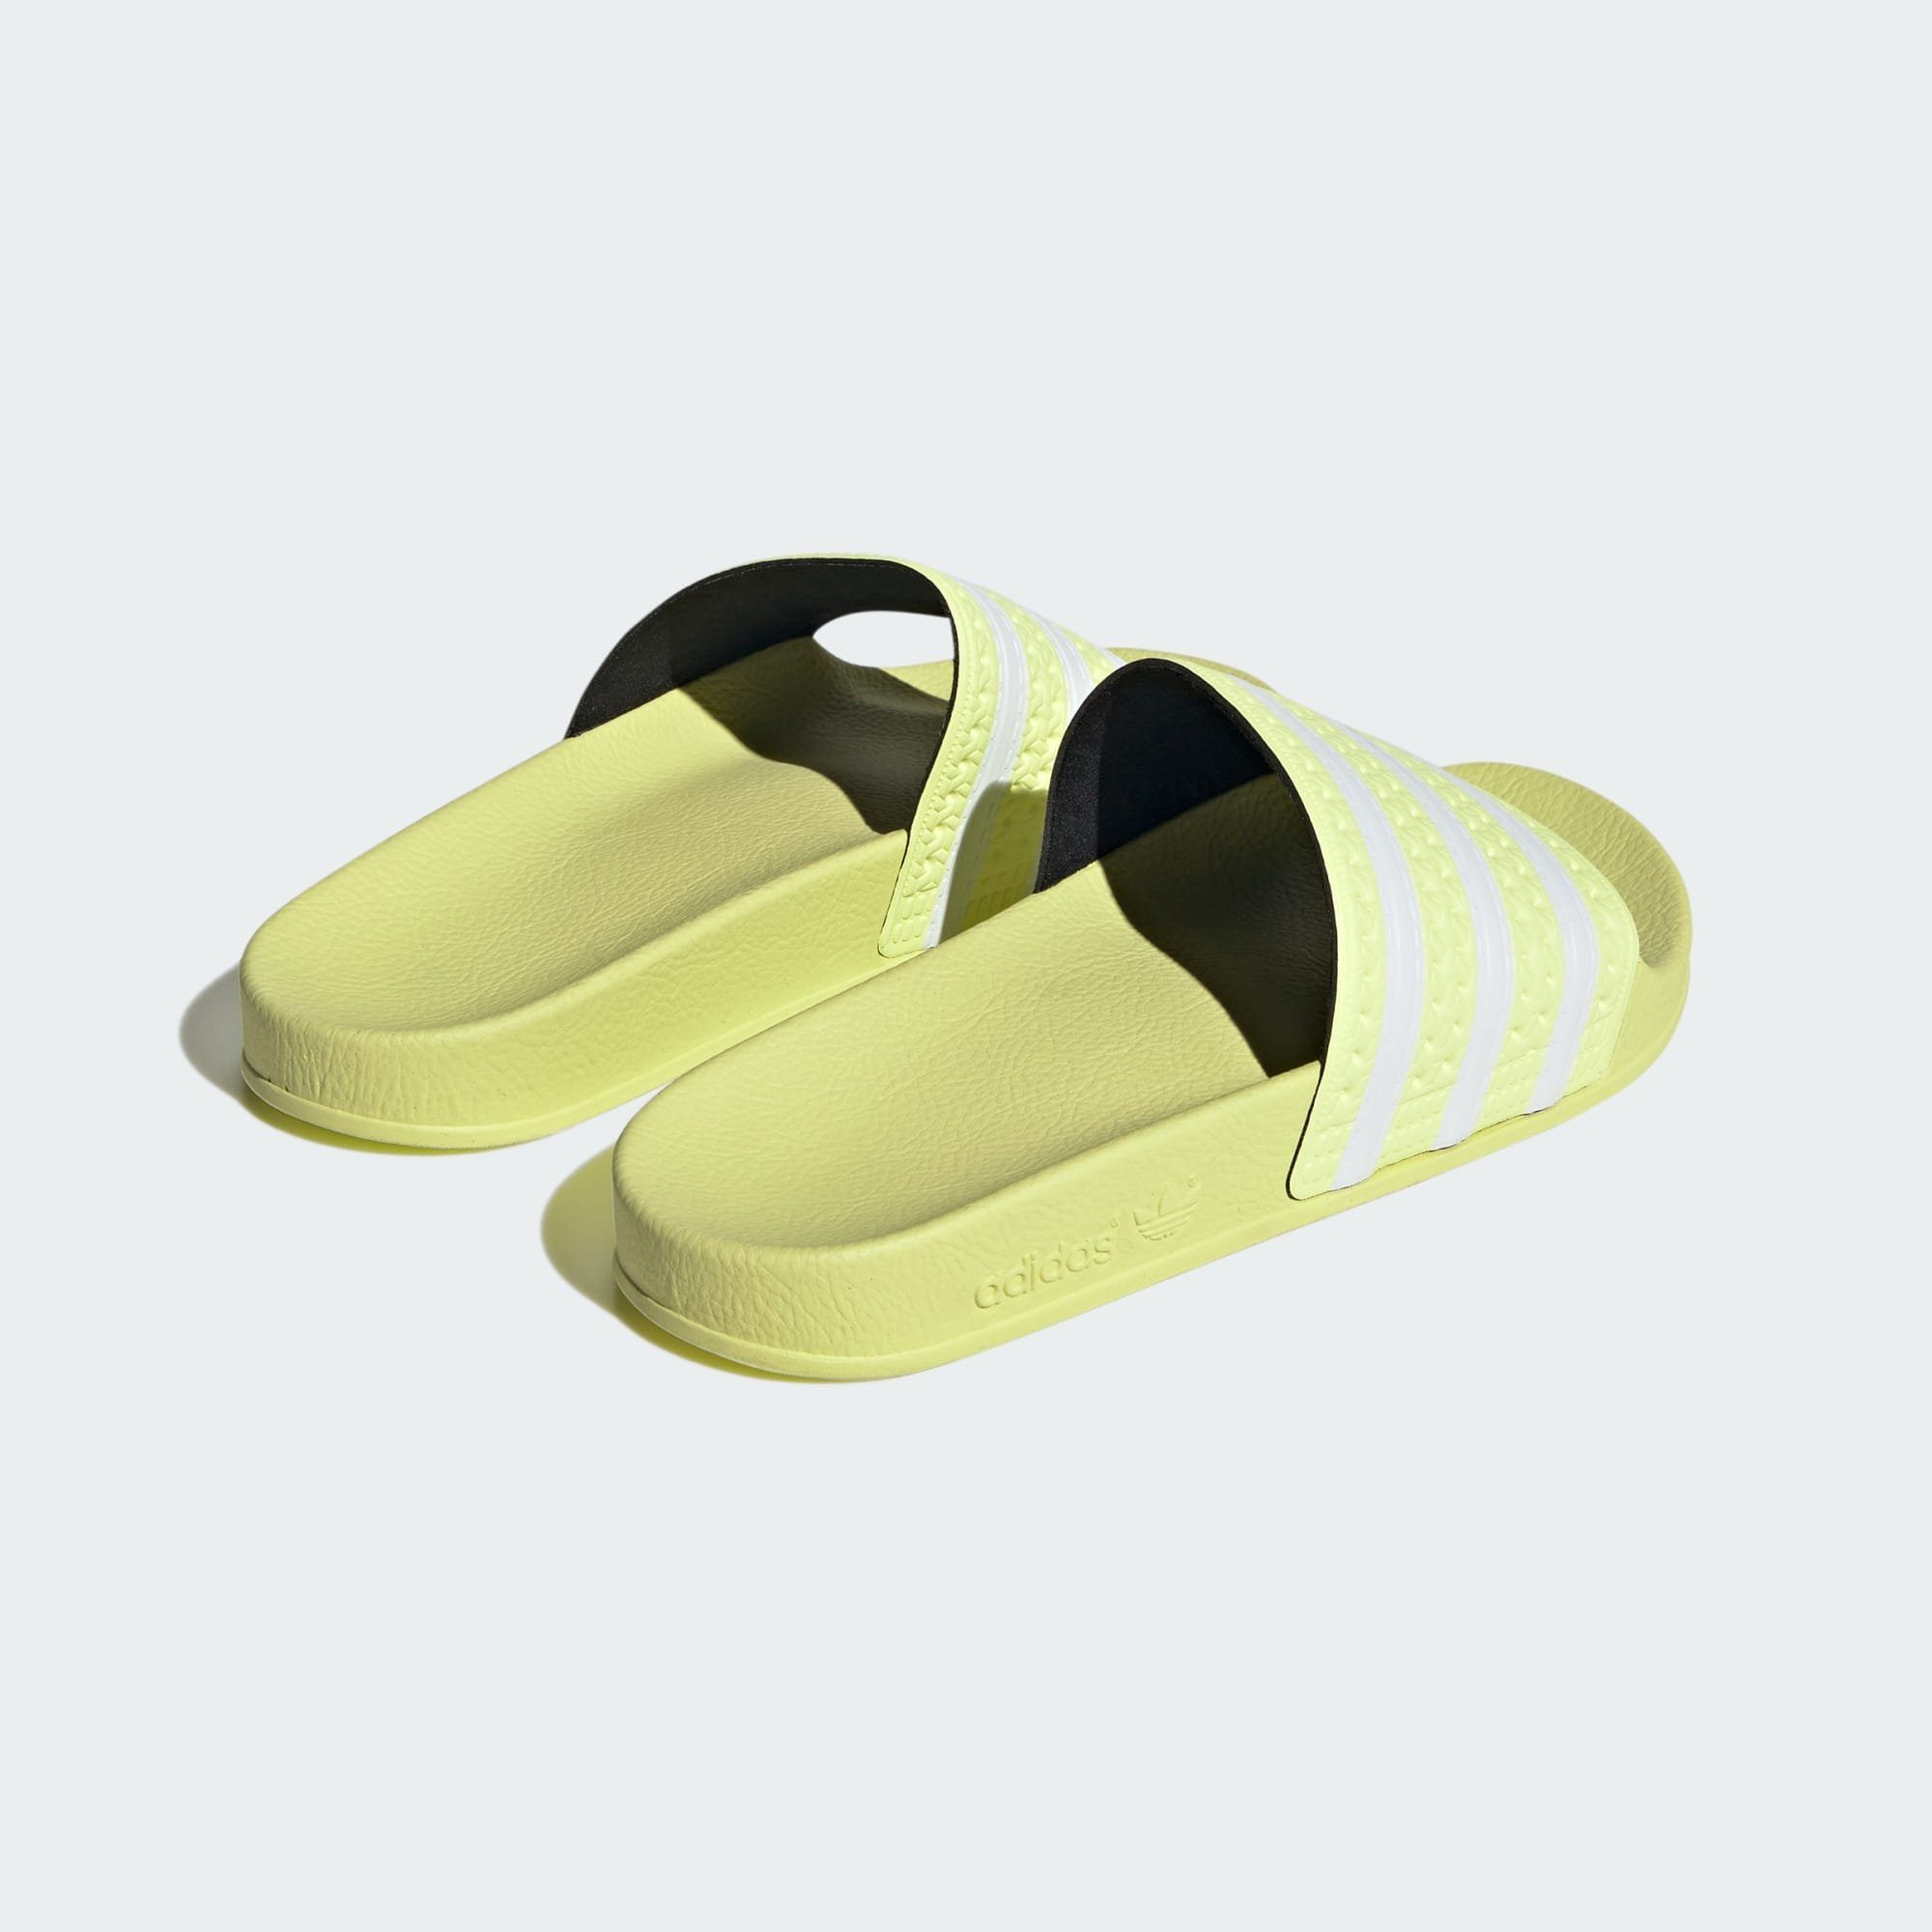 ADILETTE Yellow Pulse / Cloud Originals White Badesandale adidas / Pulse Yellow